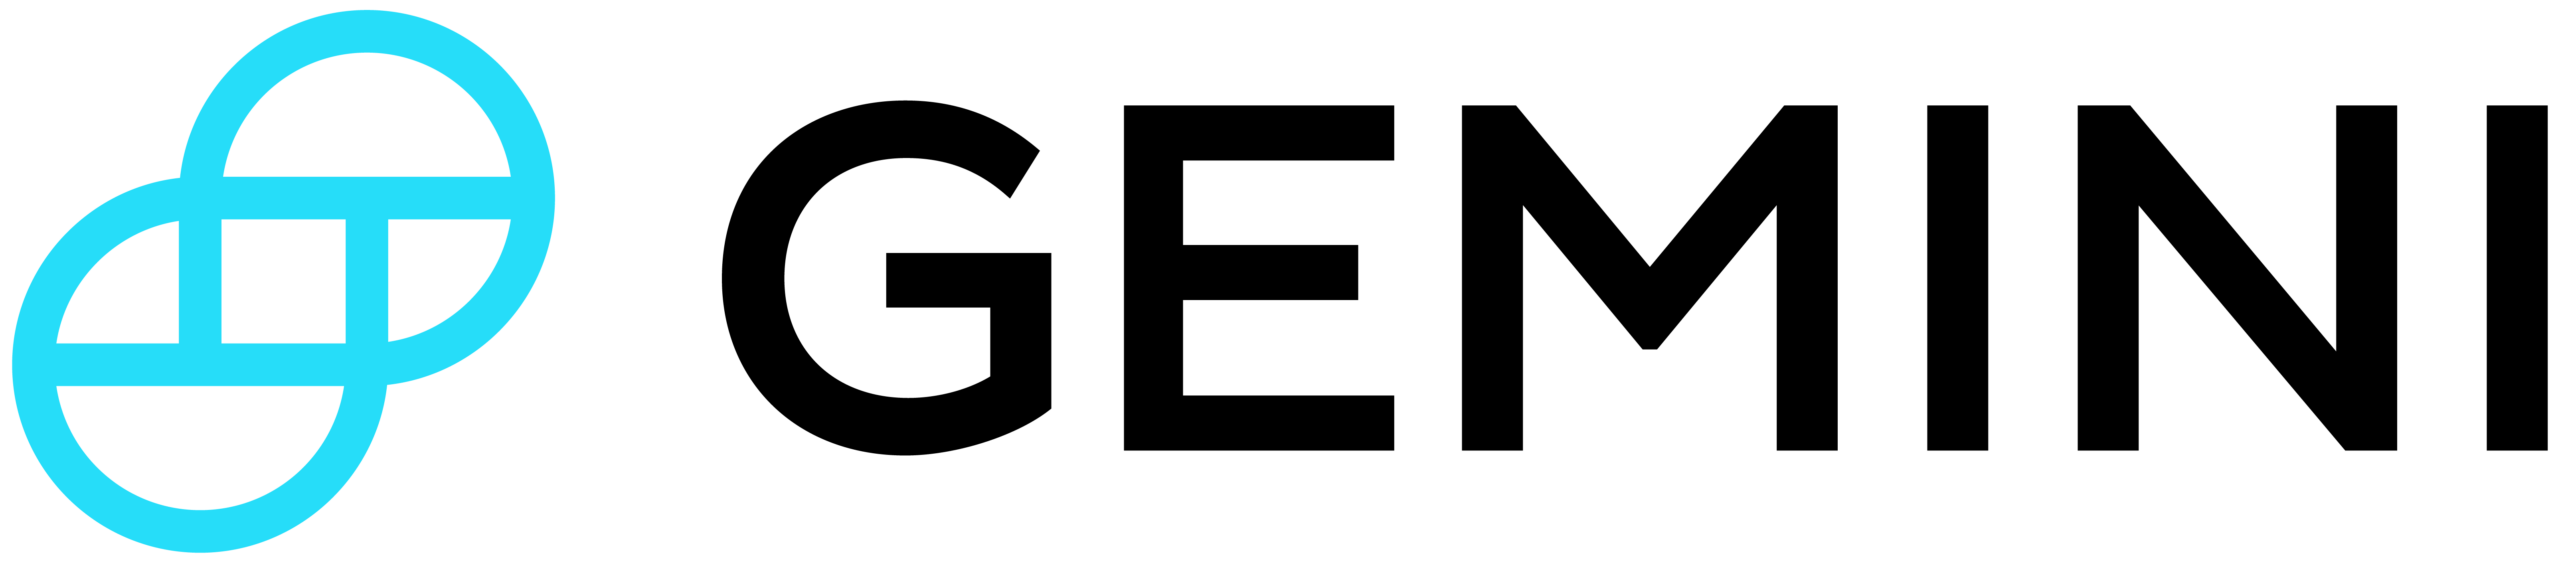 Логотип кошелька Gemini